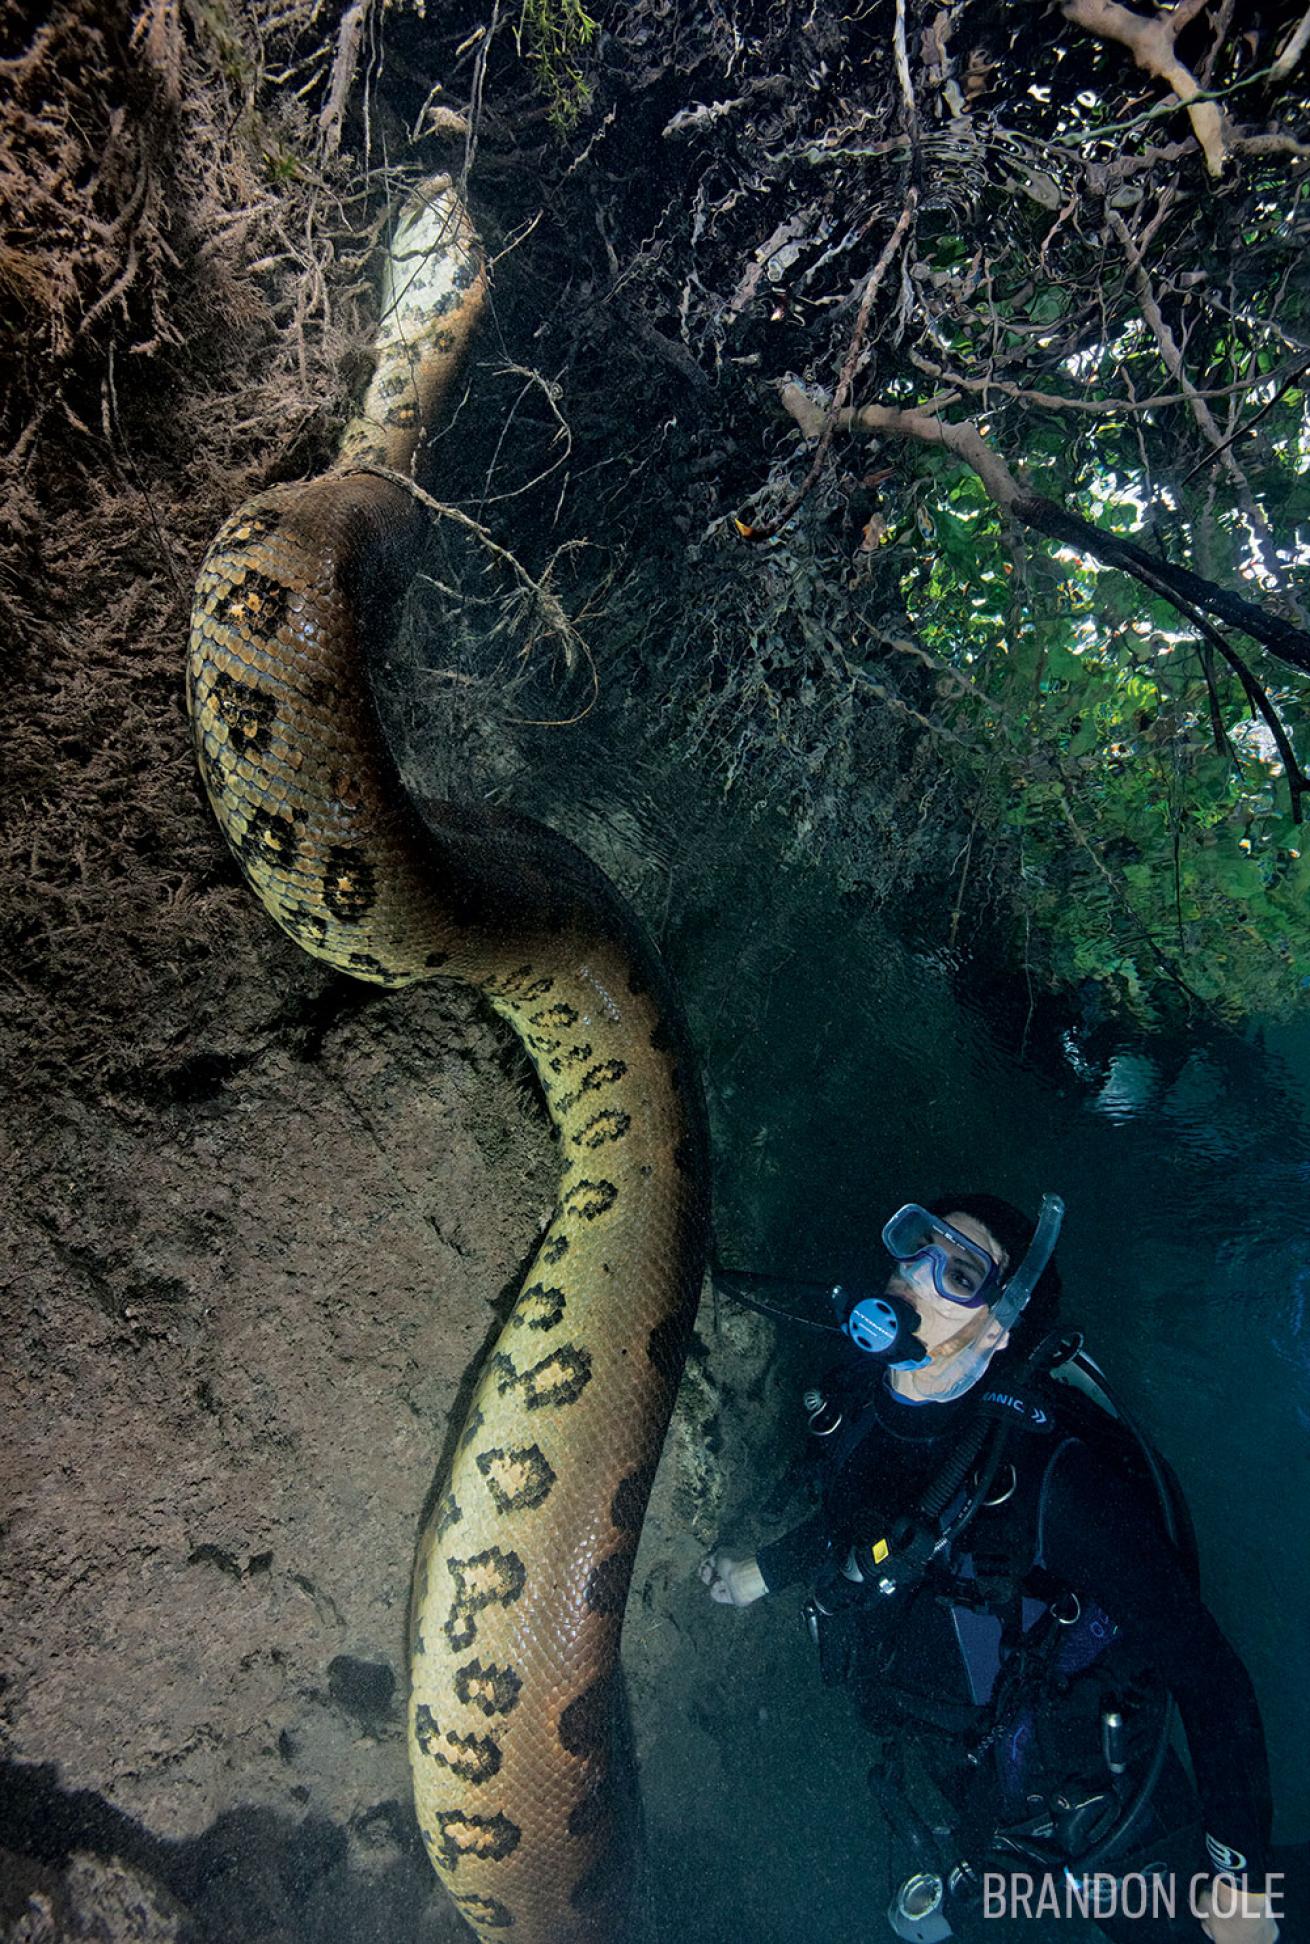 Scuba diver next to anaconda underwater in Brazil